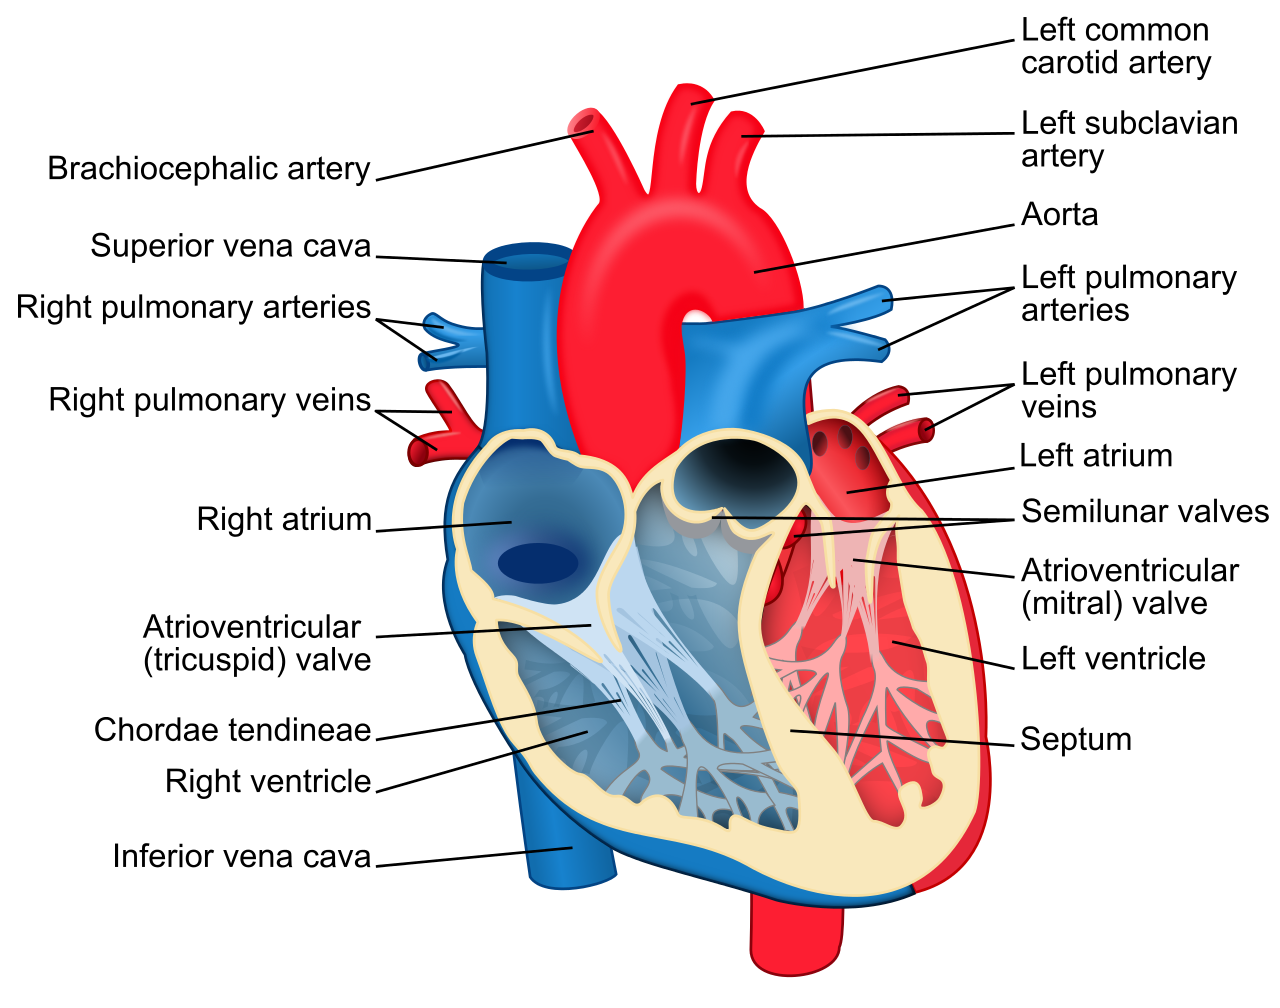 File:Heart diagram-en.svg - Wikipedia, the free encyclopedia